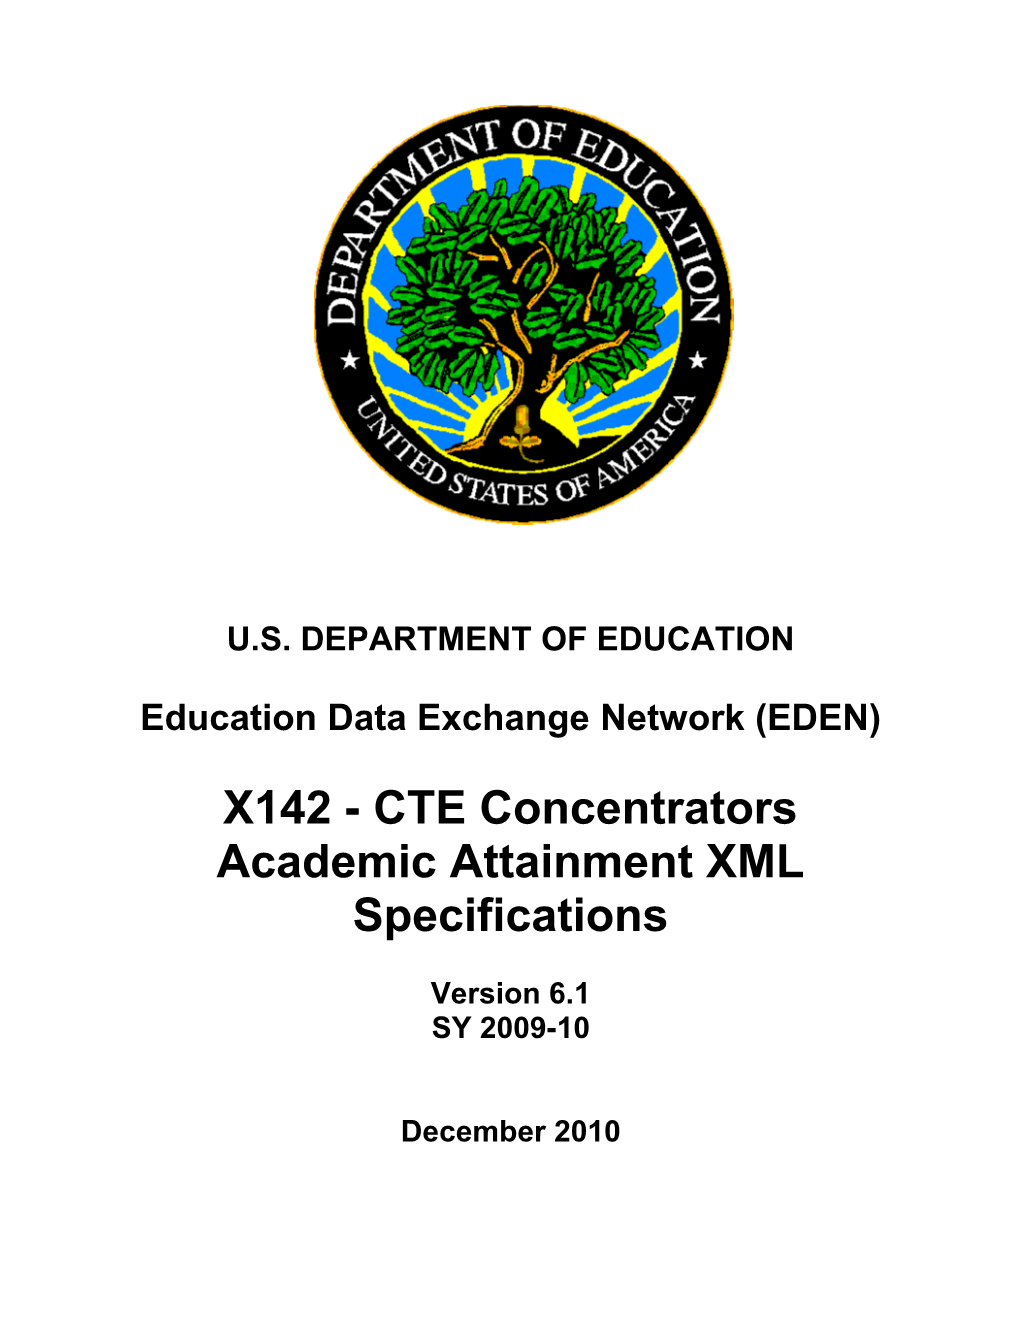 CTE Concentrators Academic Attainment XML Specifications